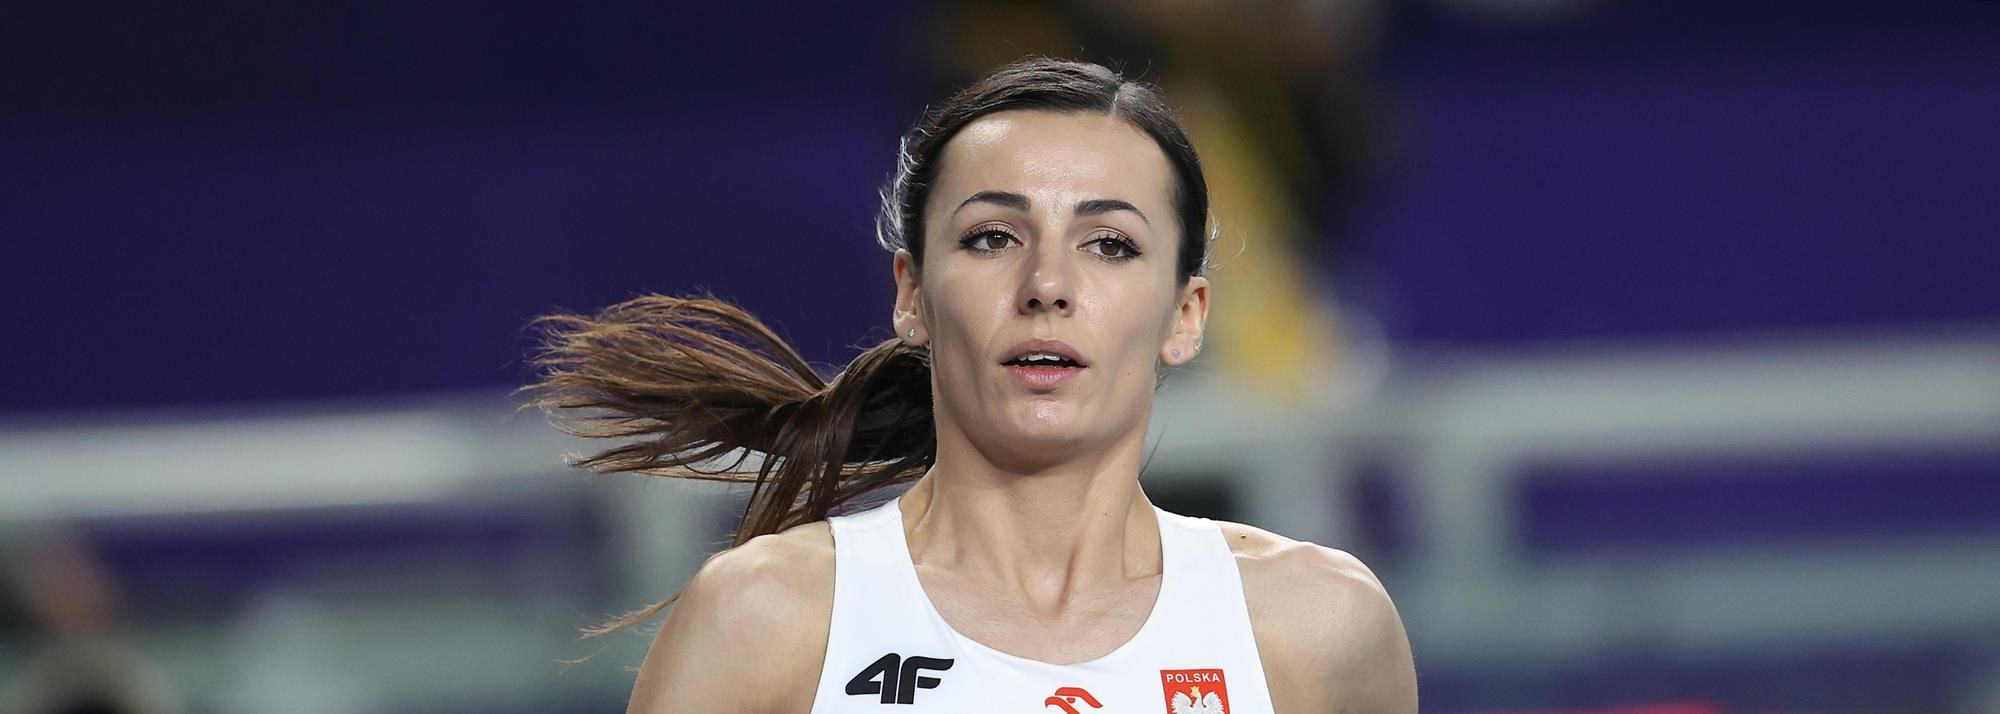 Anna WIELGOSZ | Profile | World Athletics